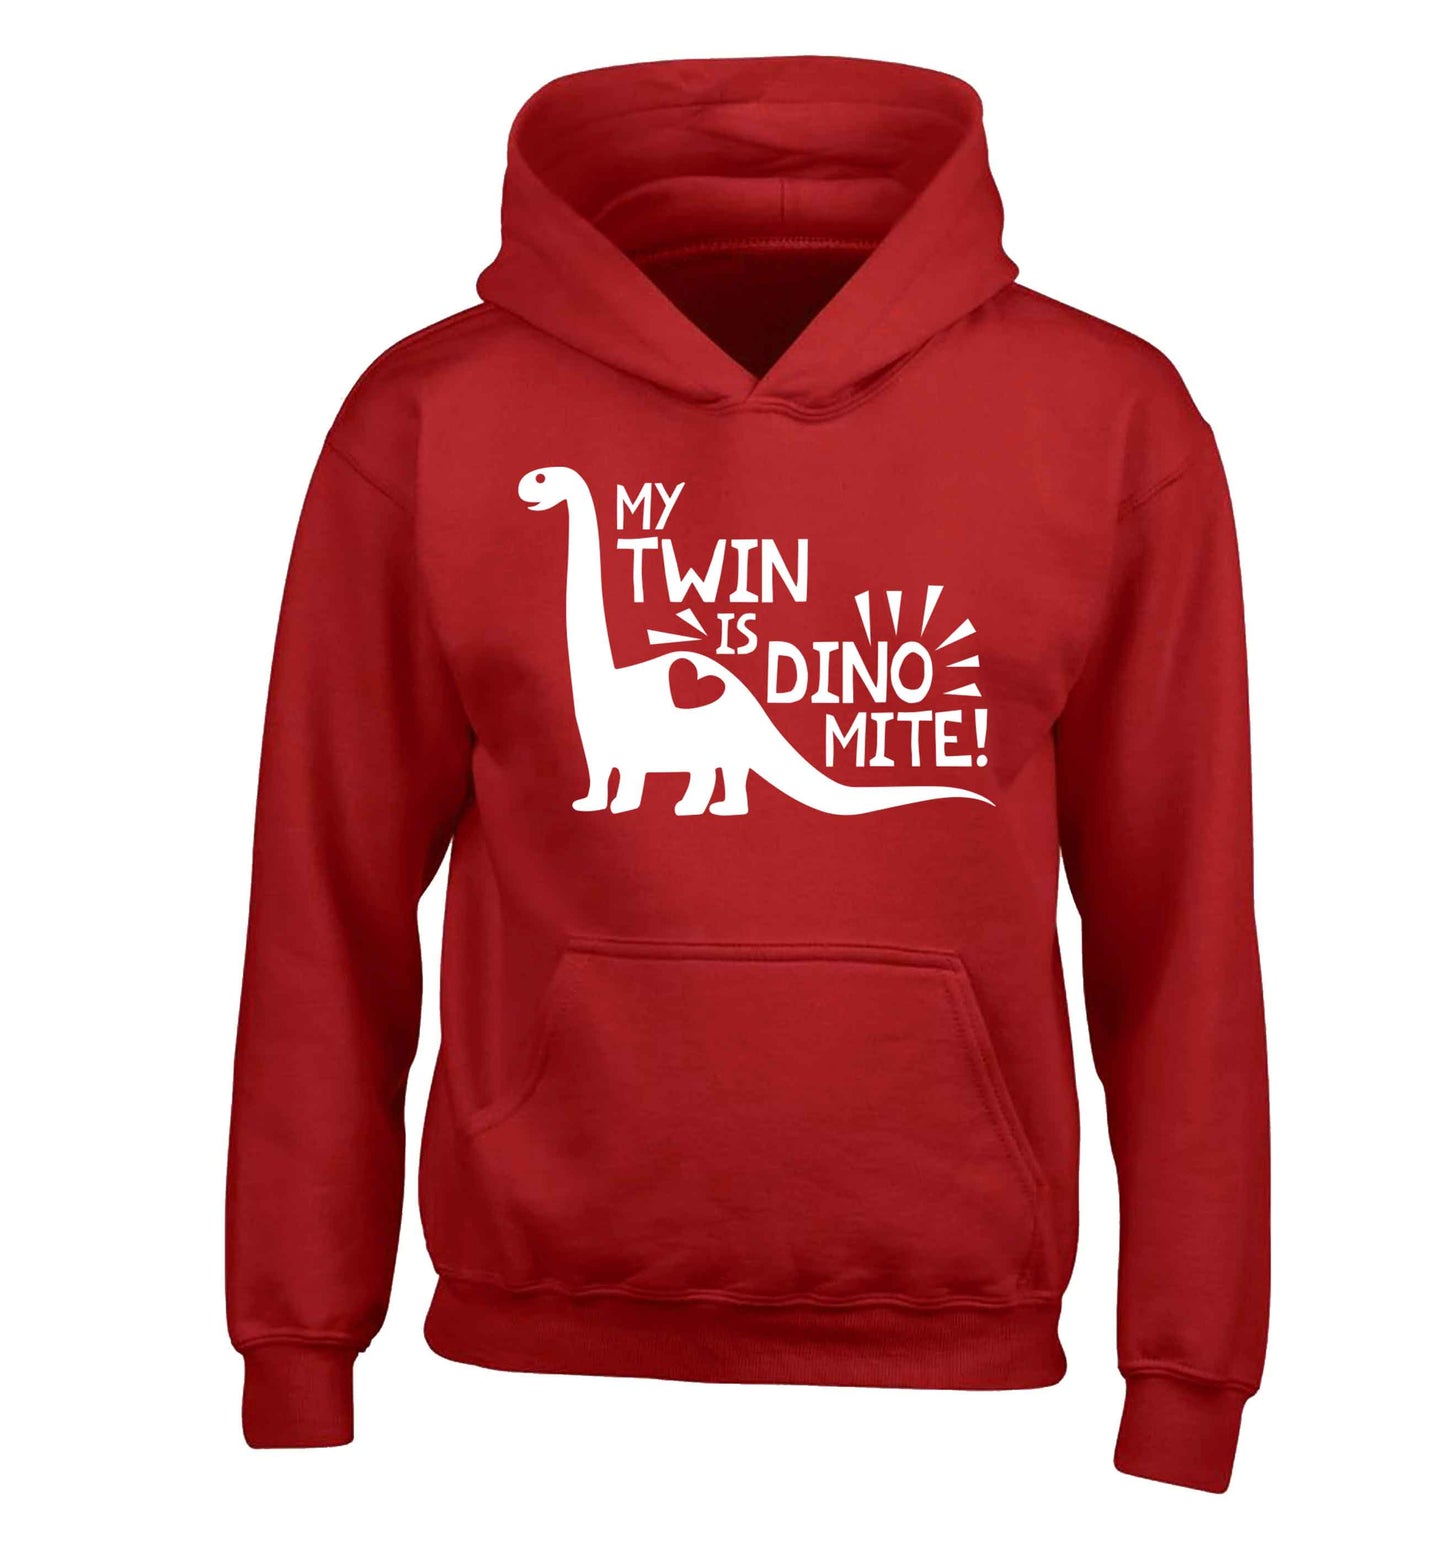 My twin is dinomite! children's red hoodie 12-13 Years